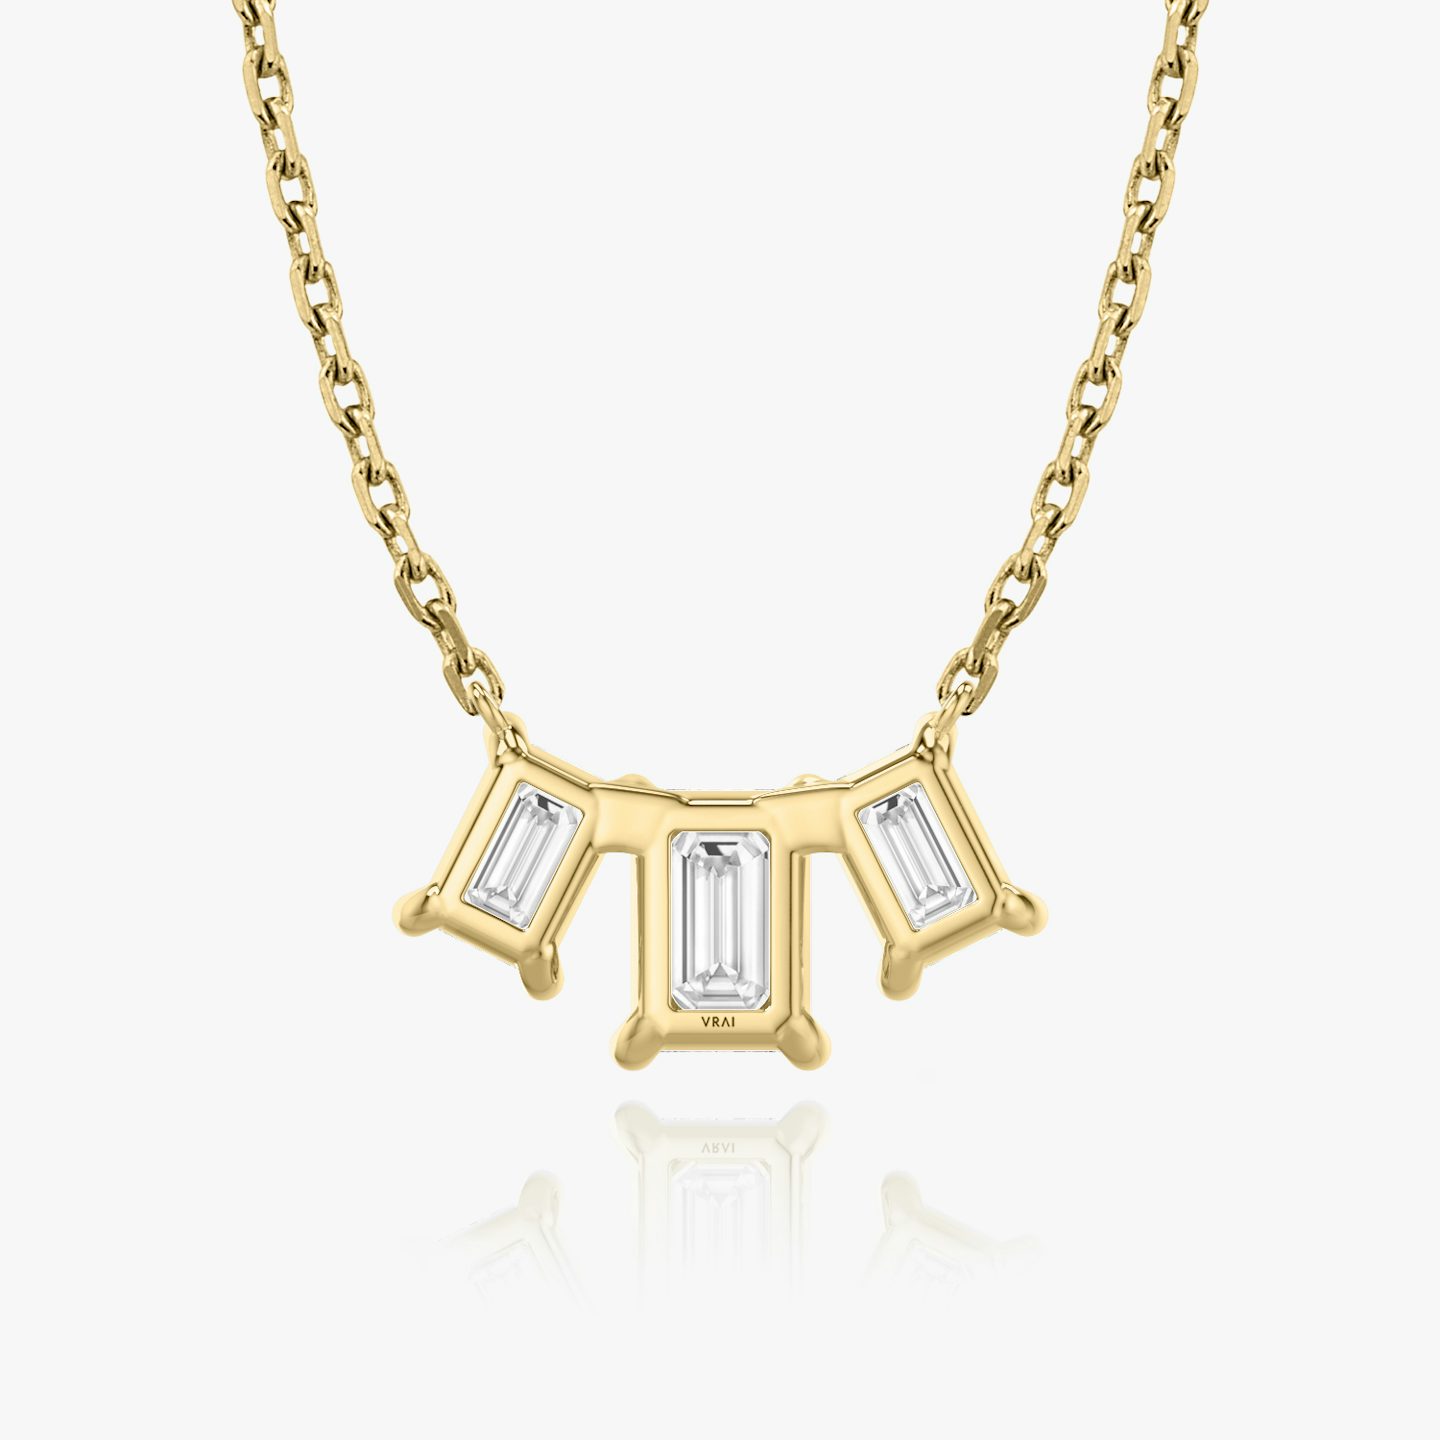 undefined | Emerald | 14k | Yellow Gold | diamondCount: 3 | diamondSize: large | chainLength: 16-18